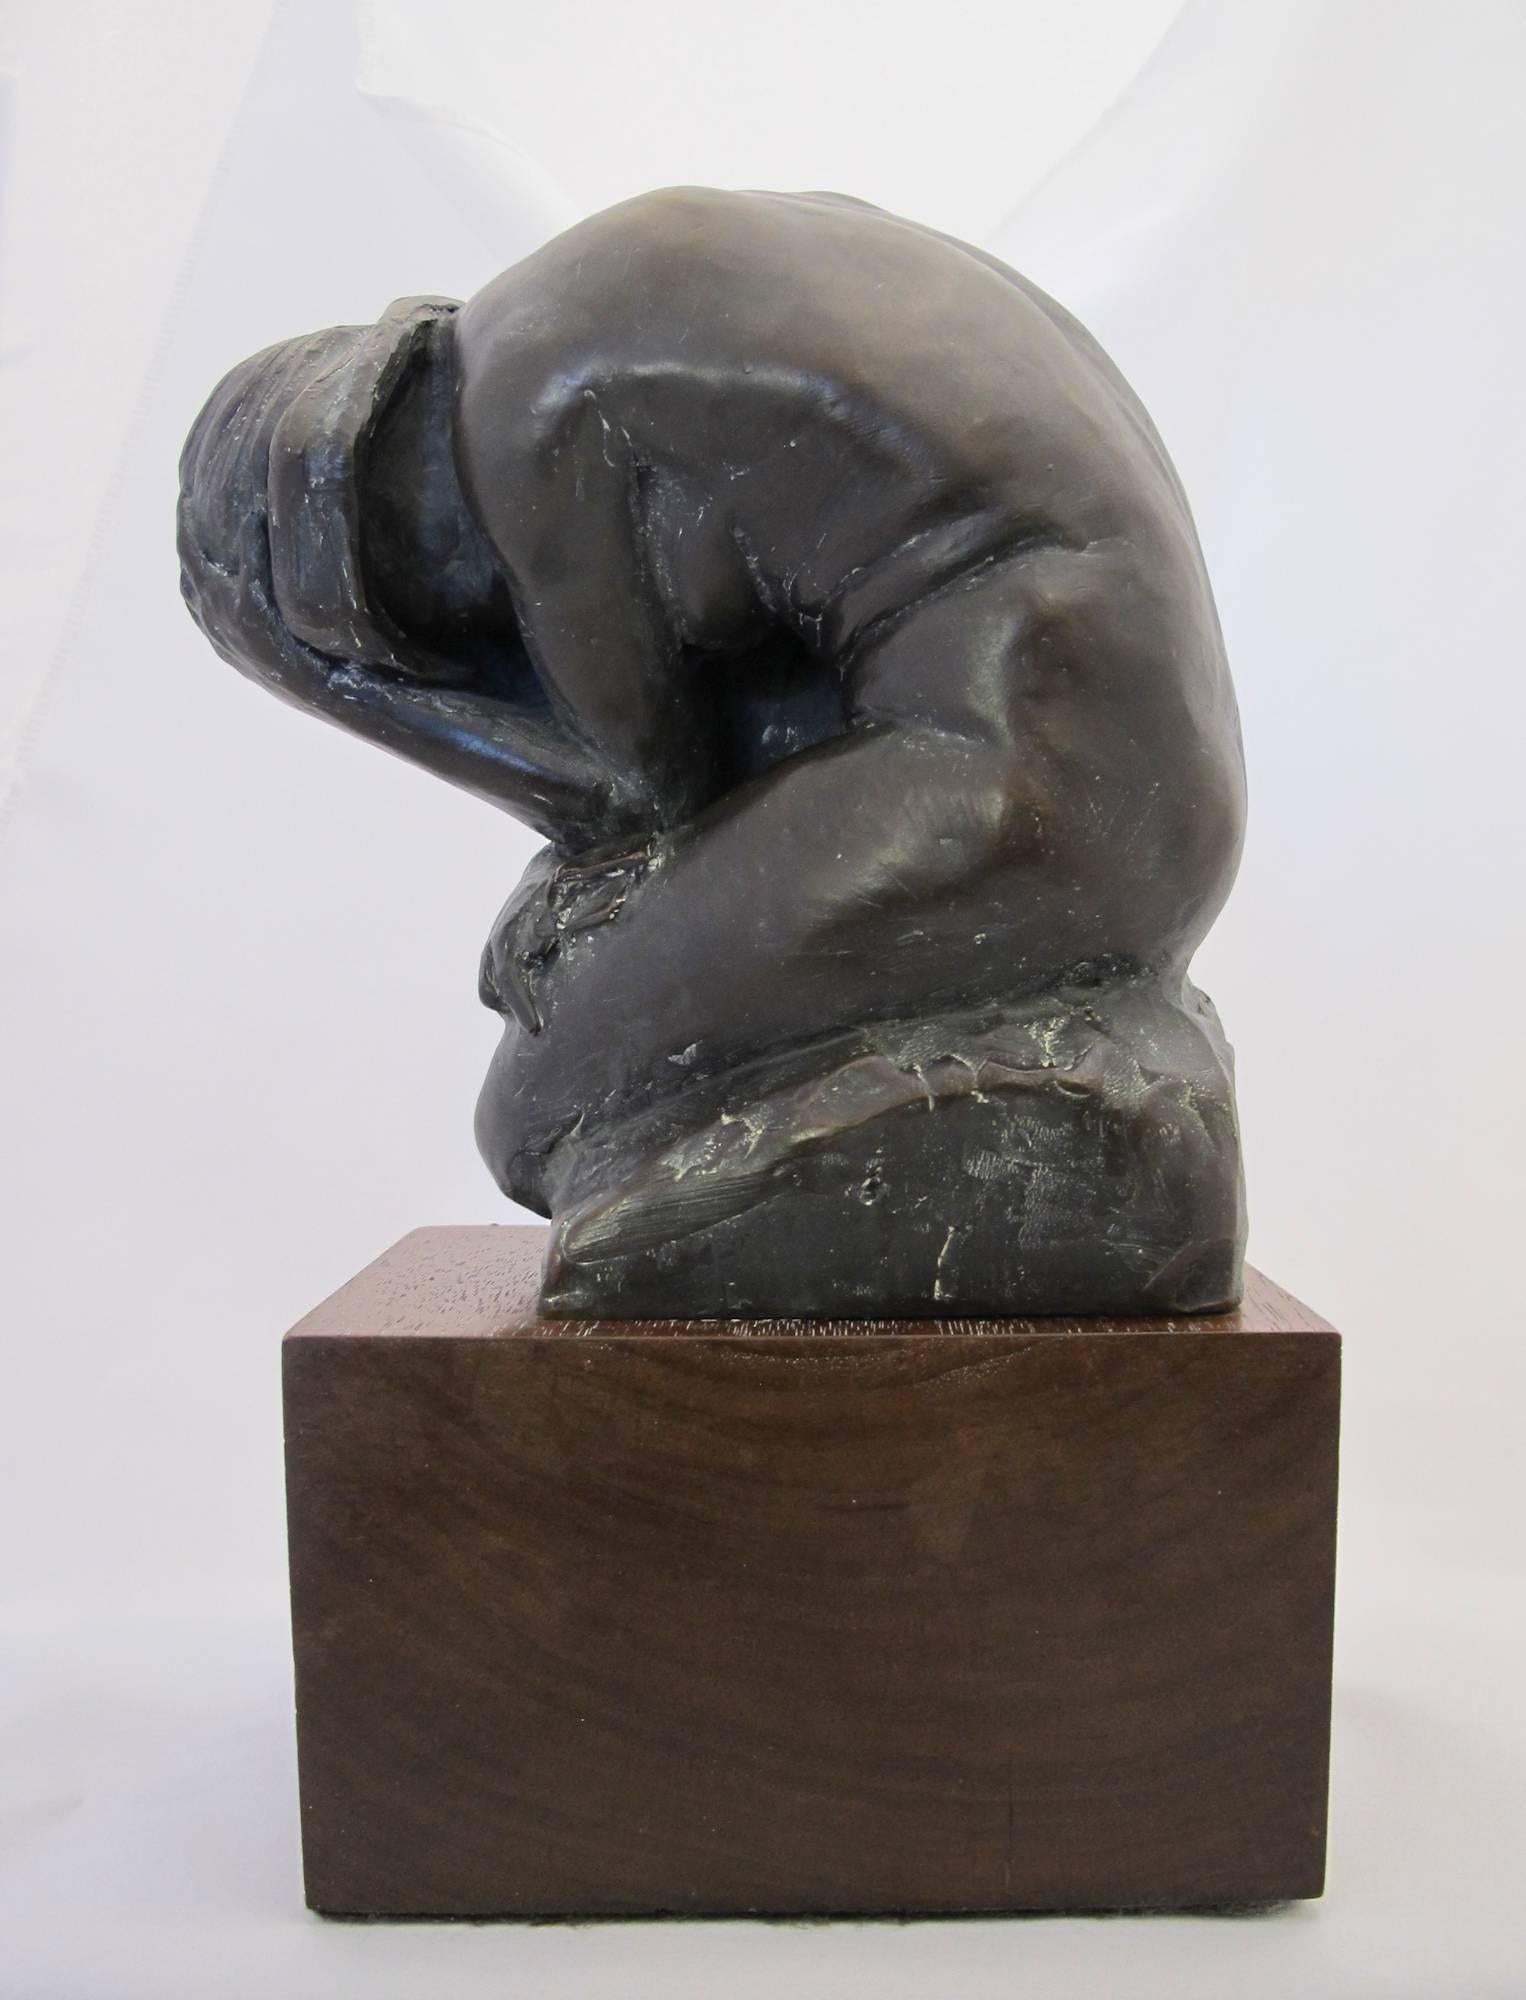 Indigo, bathing nude, bronze sculpture - Sculpture by Paul Moore